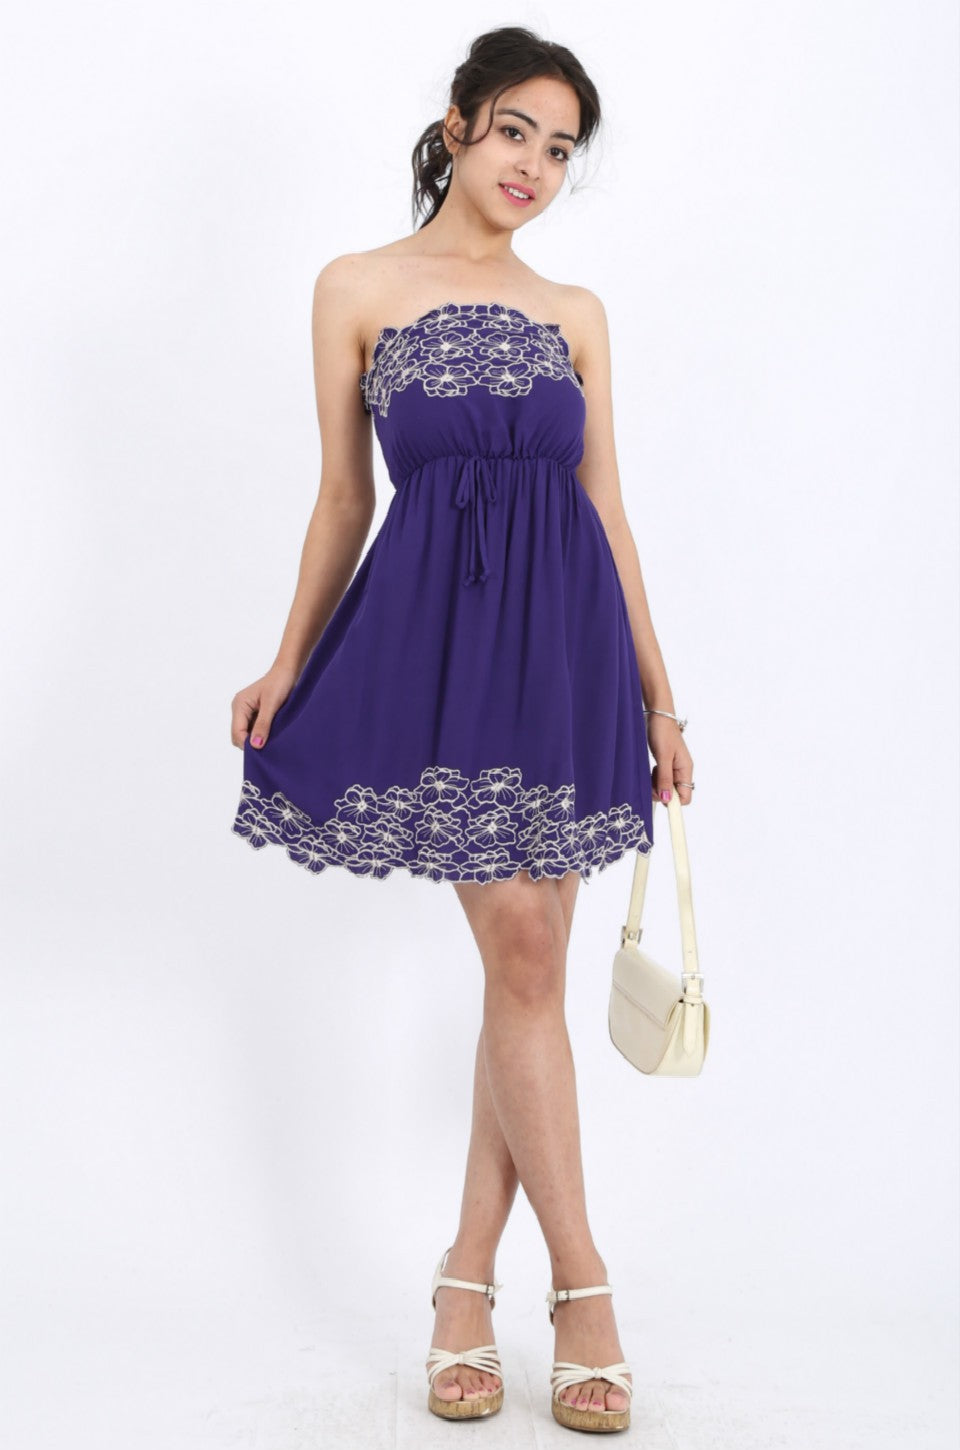 MISS PINKI Aria Embroidery dress in purple boob-tube dress casual dress summer dress sundress beach dress